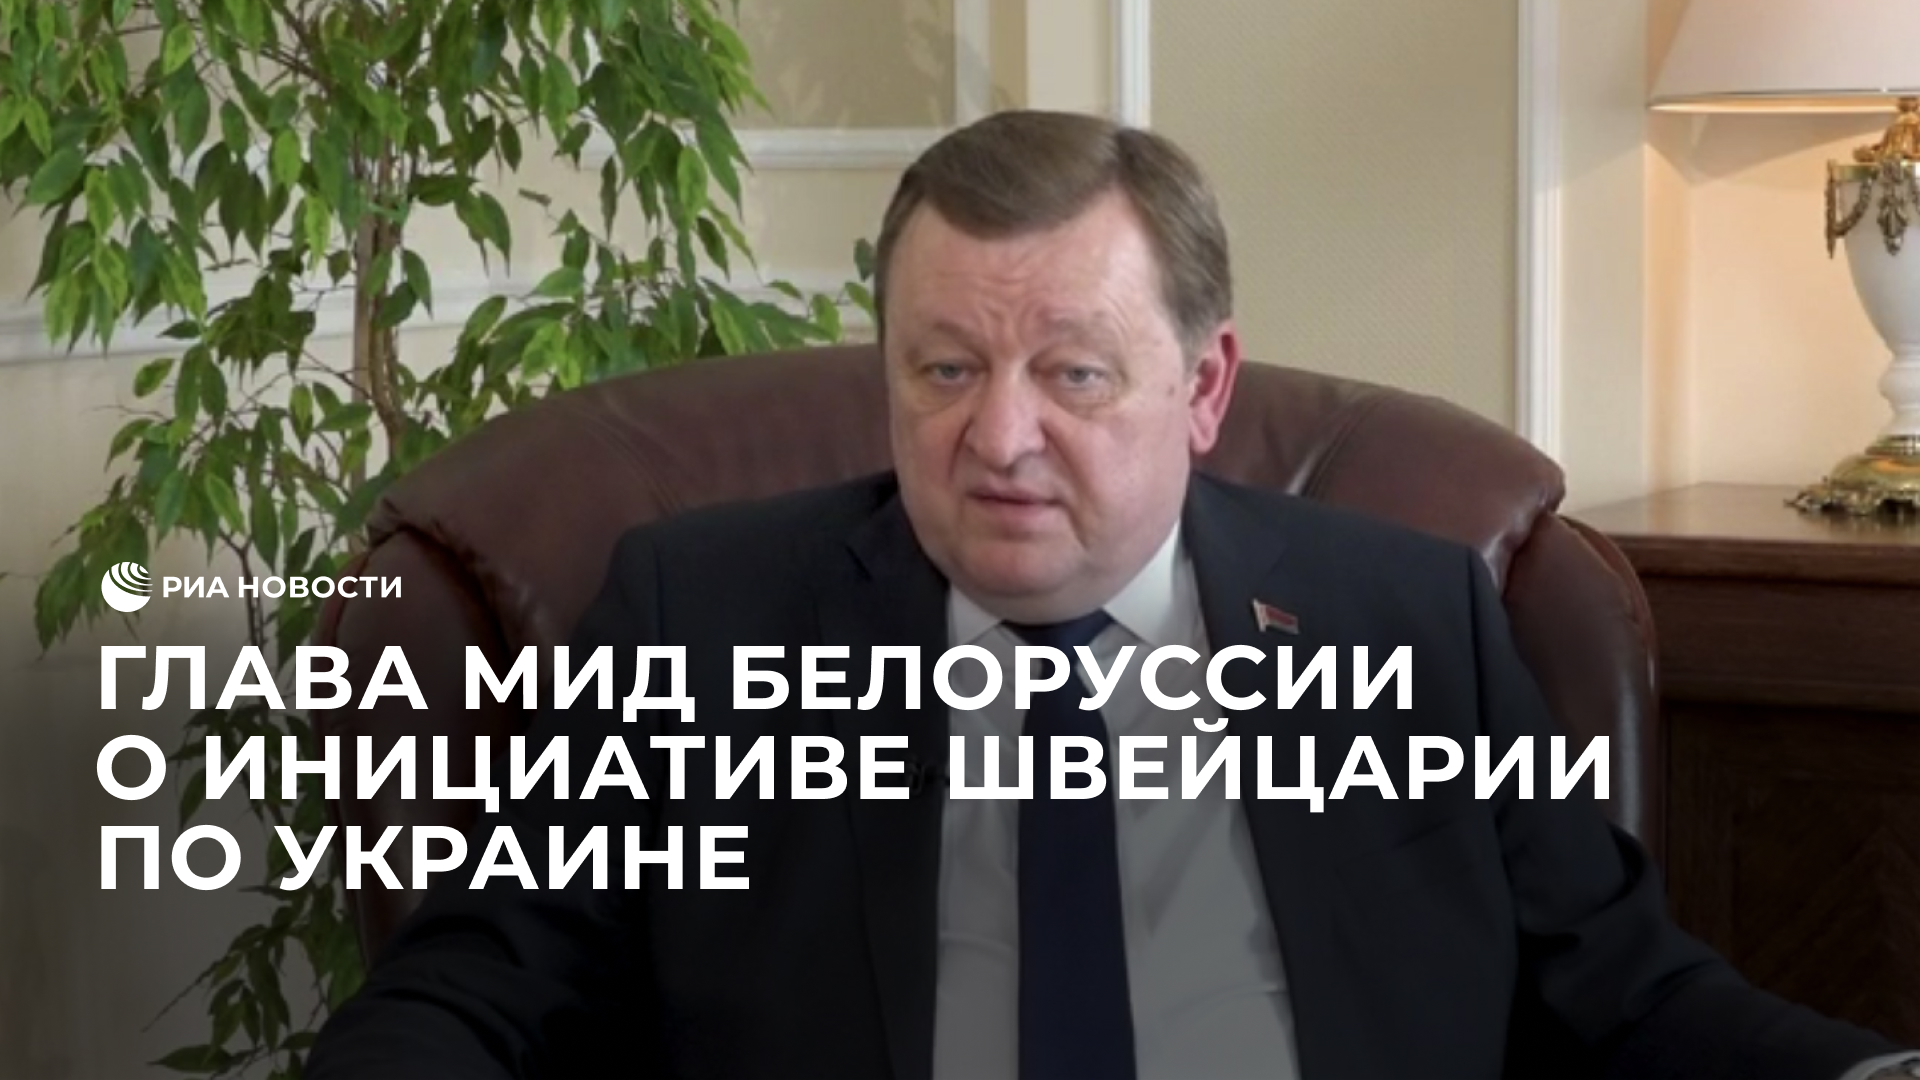 Глава МИД Белоруссии о инициативе Швейцарии по Украине